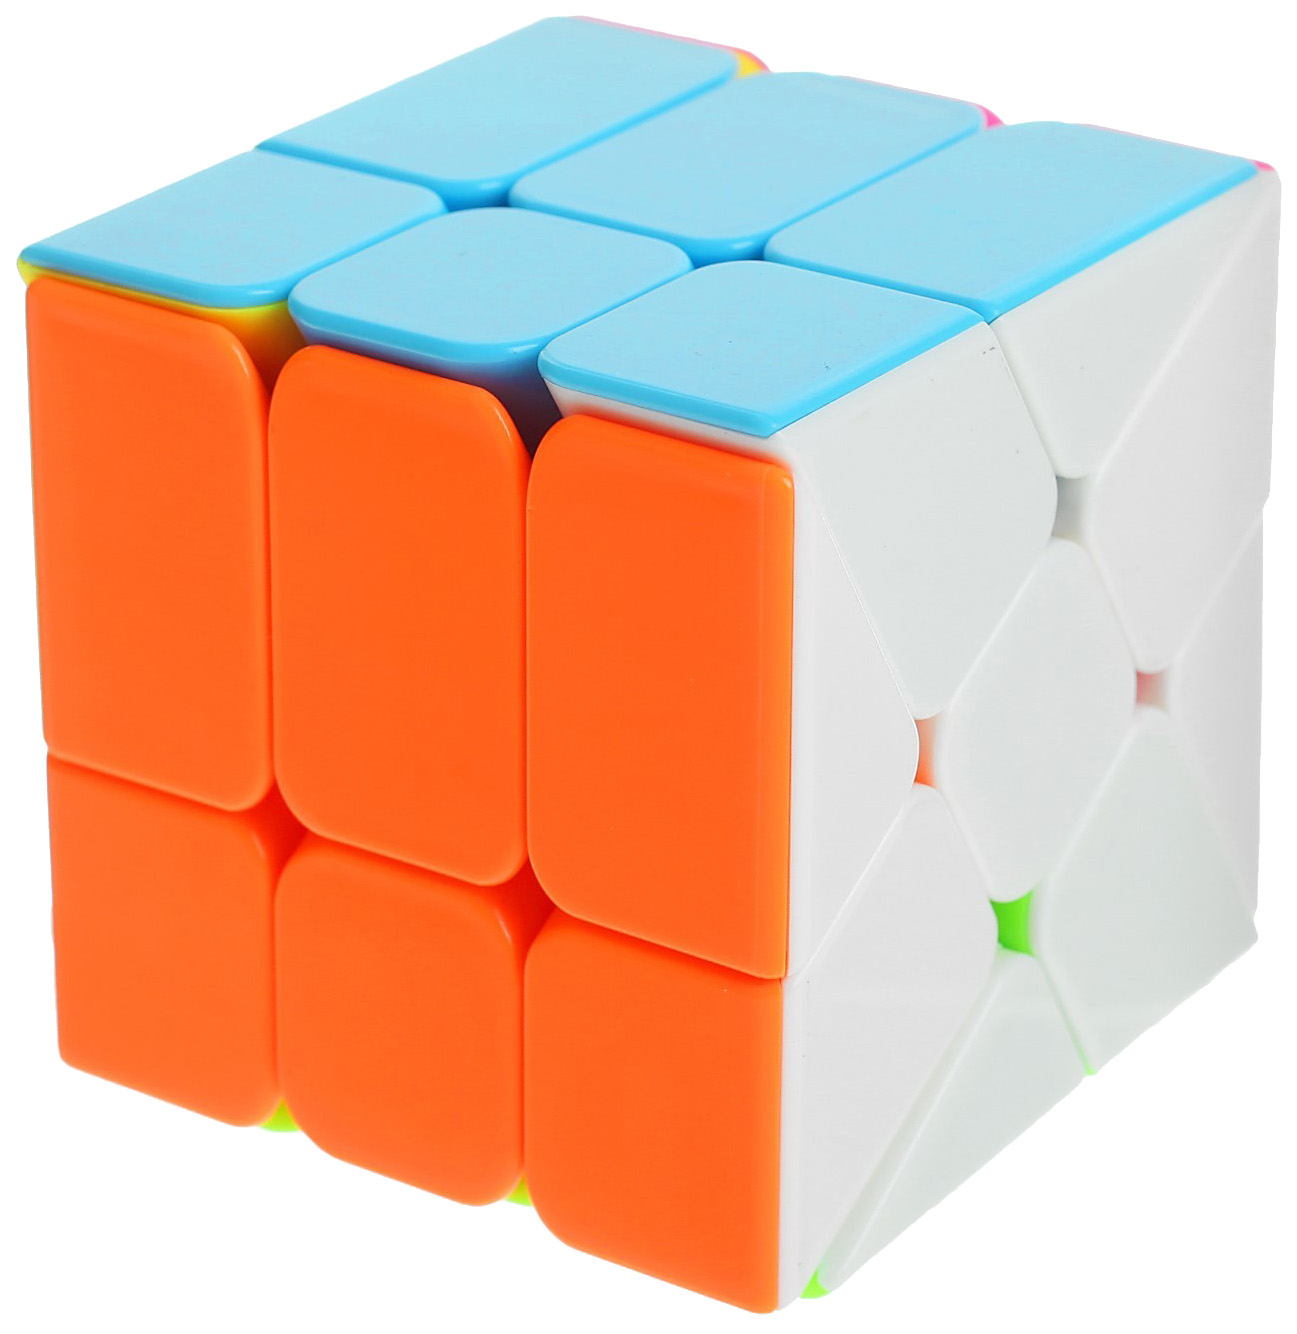 Головоломка Sima-Land Кубик 3021084 головоломка кубик кленовый лист